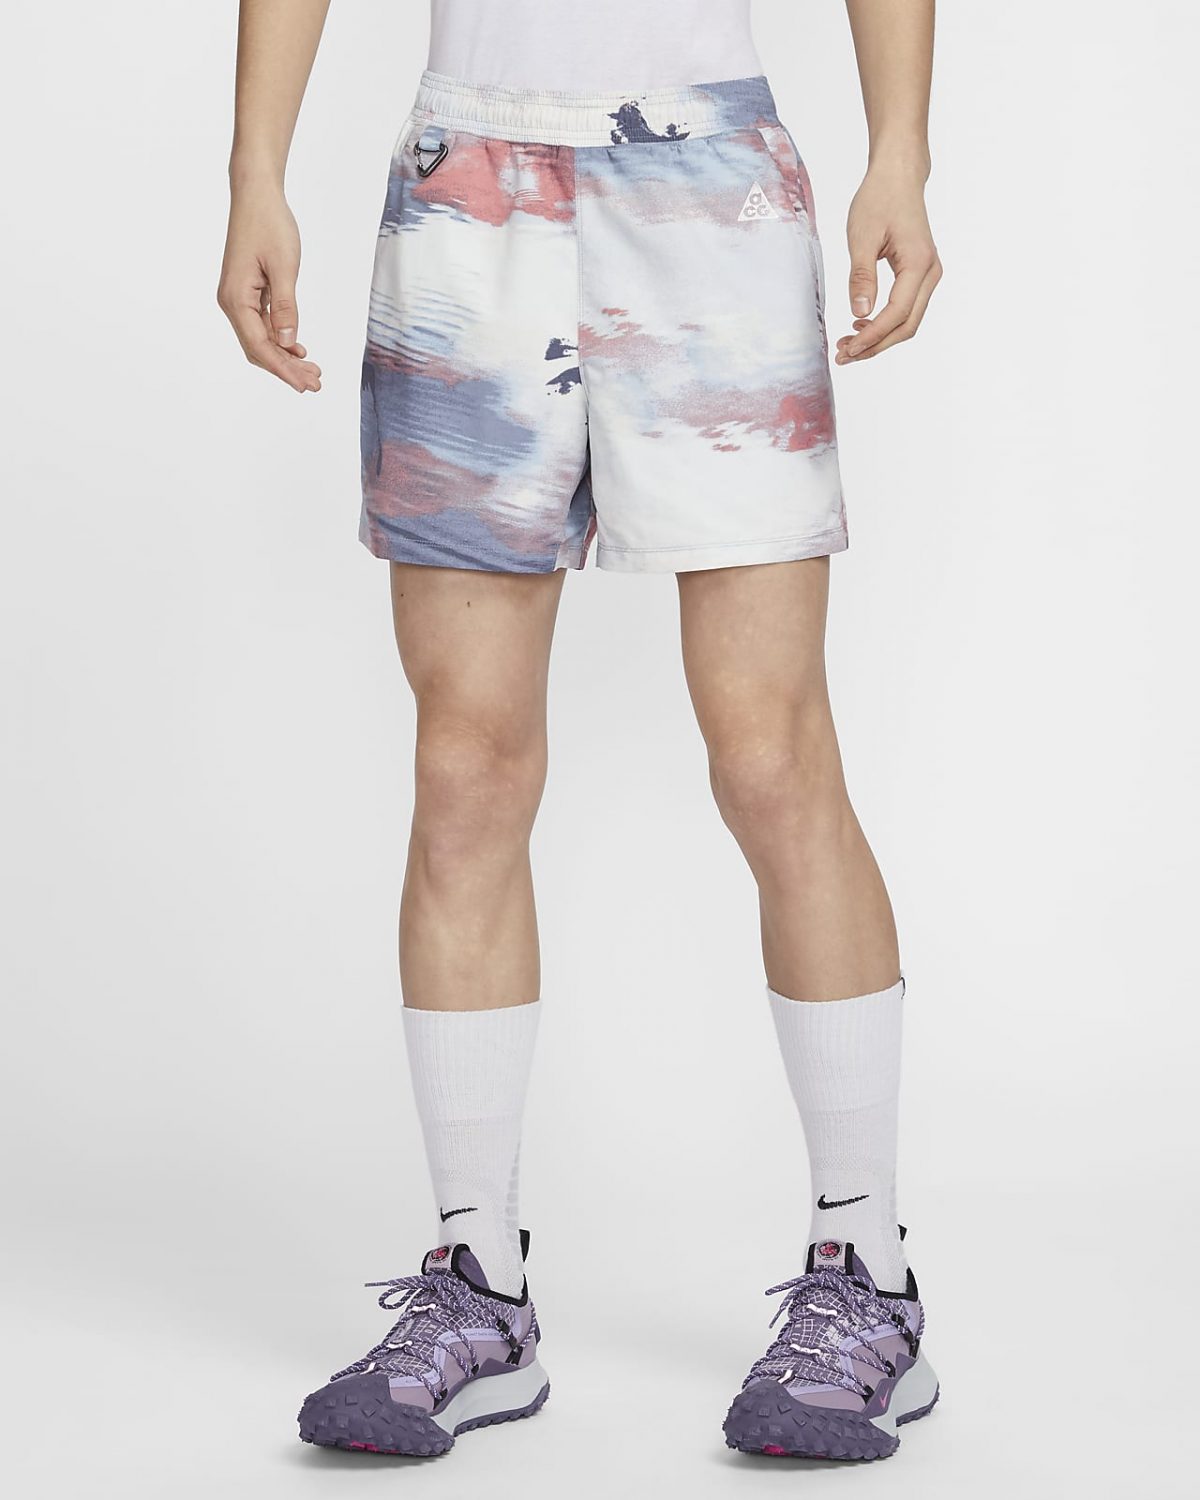 Мужские шорты Nike ACG "Reservoir Goat" фото